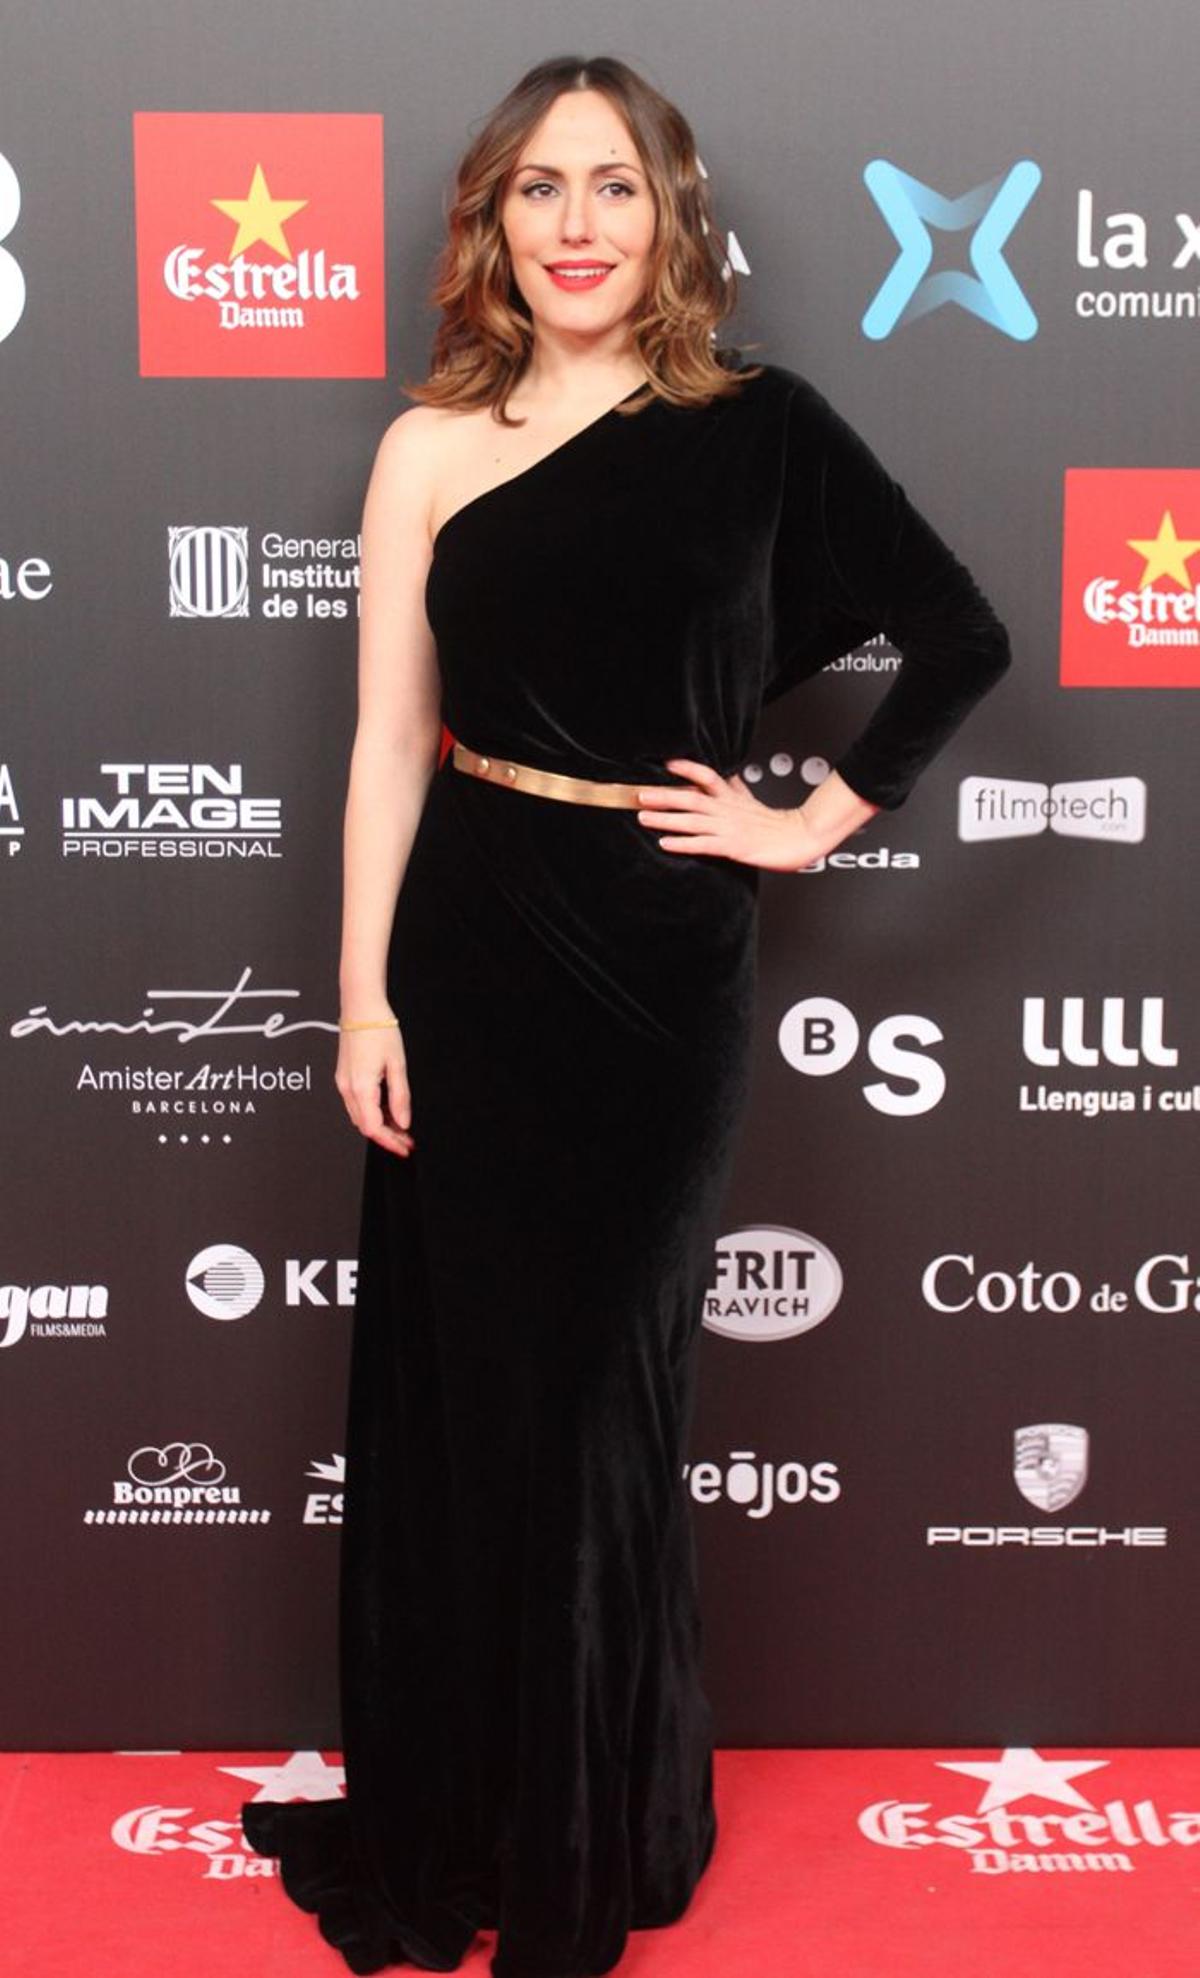 Premios Gaudí 2015: Irene Montalà